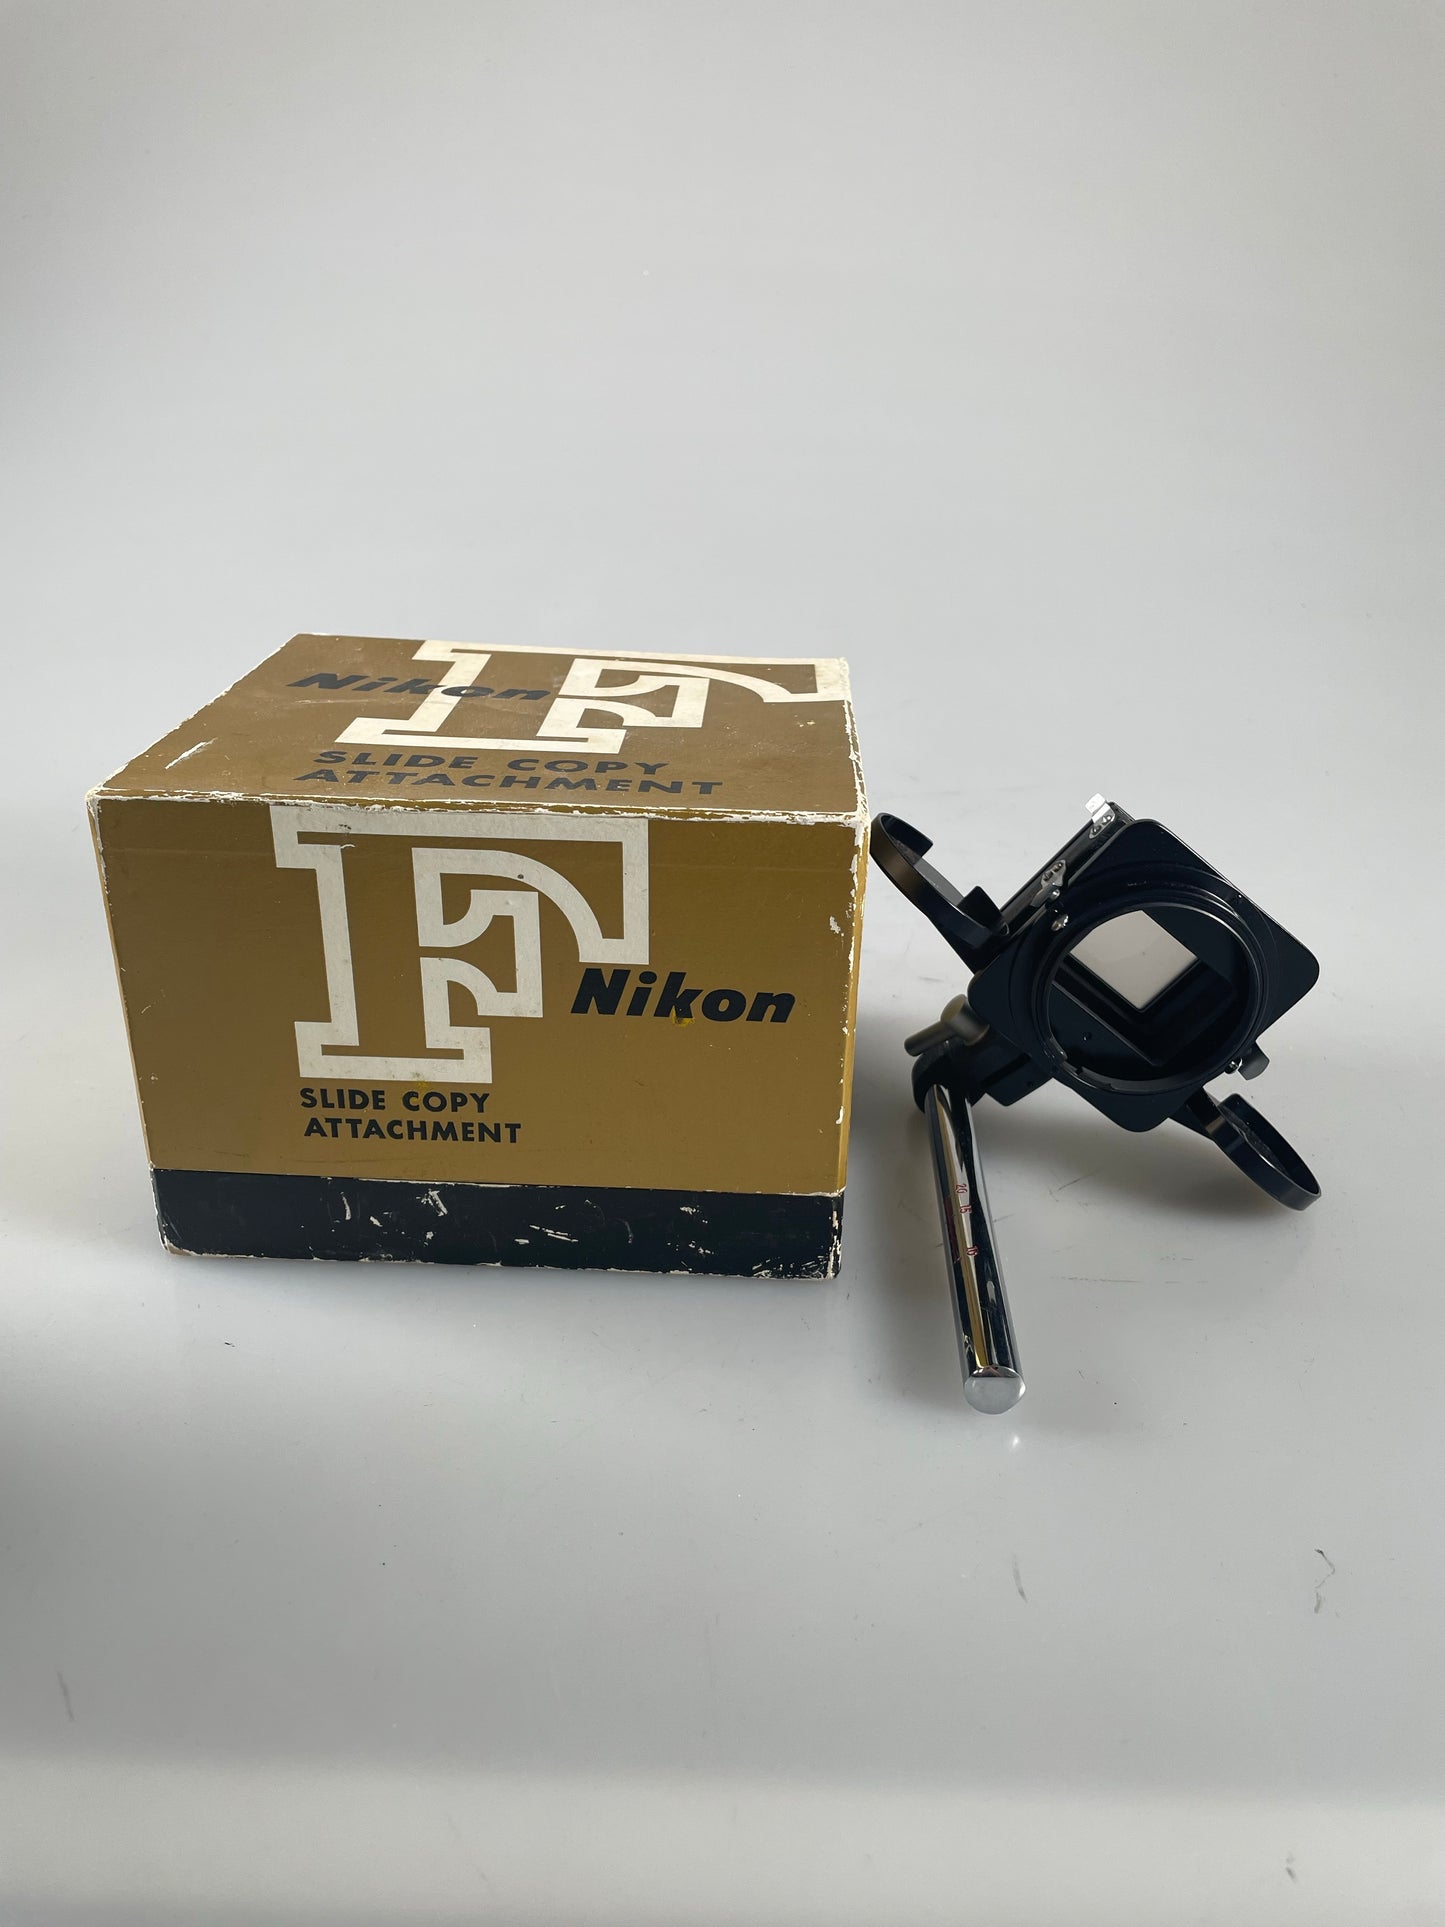 Nikon F Slide Copy Attachment Adapter Diacopier Attachment for Bellows